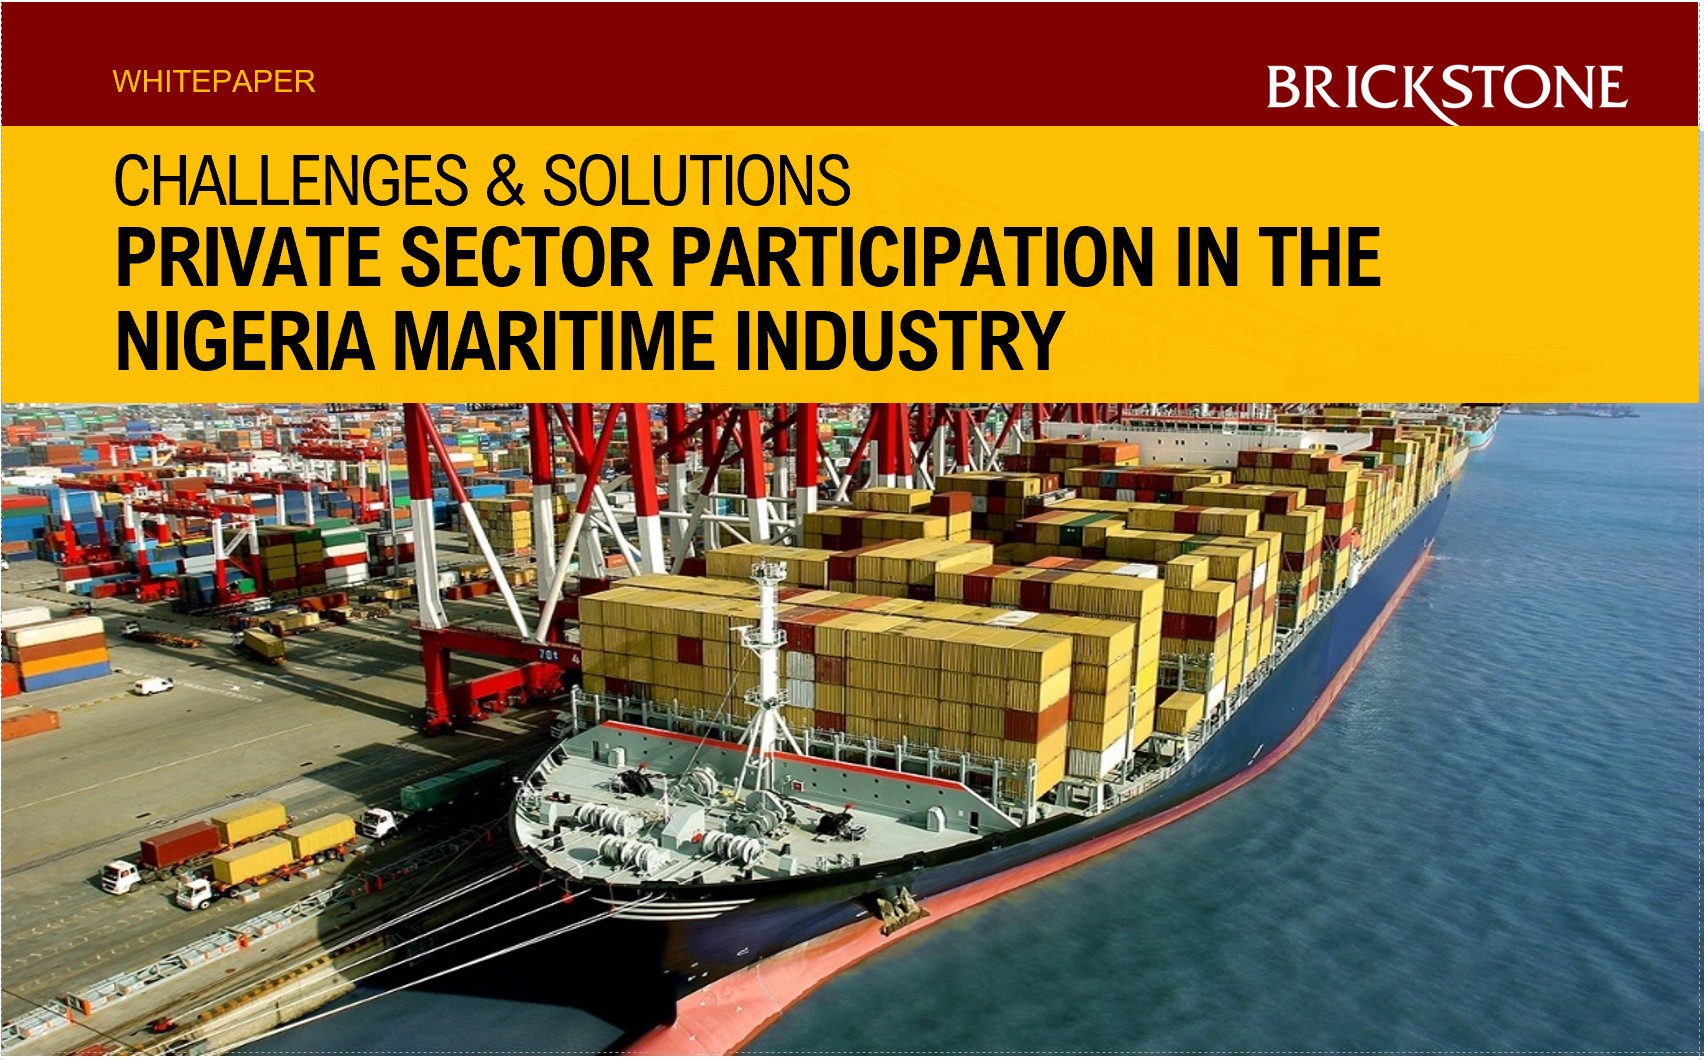 Nigeria Maritime Industry